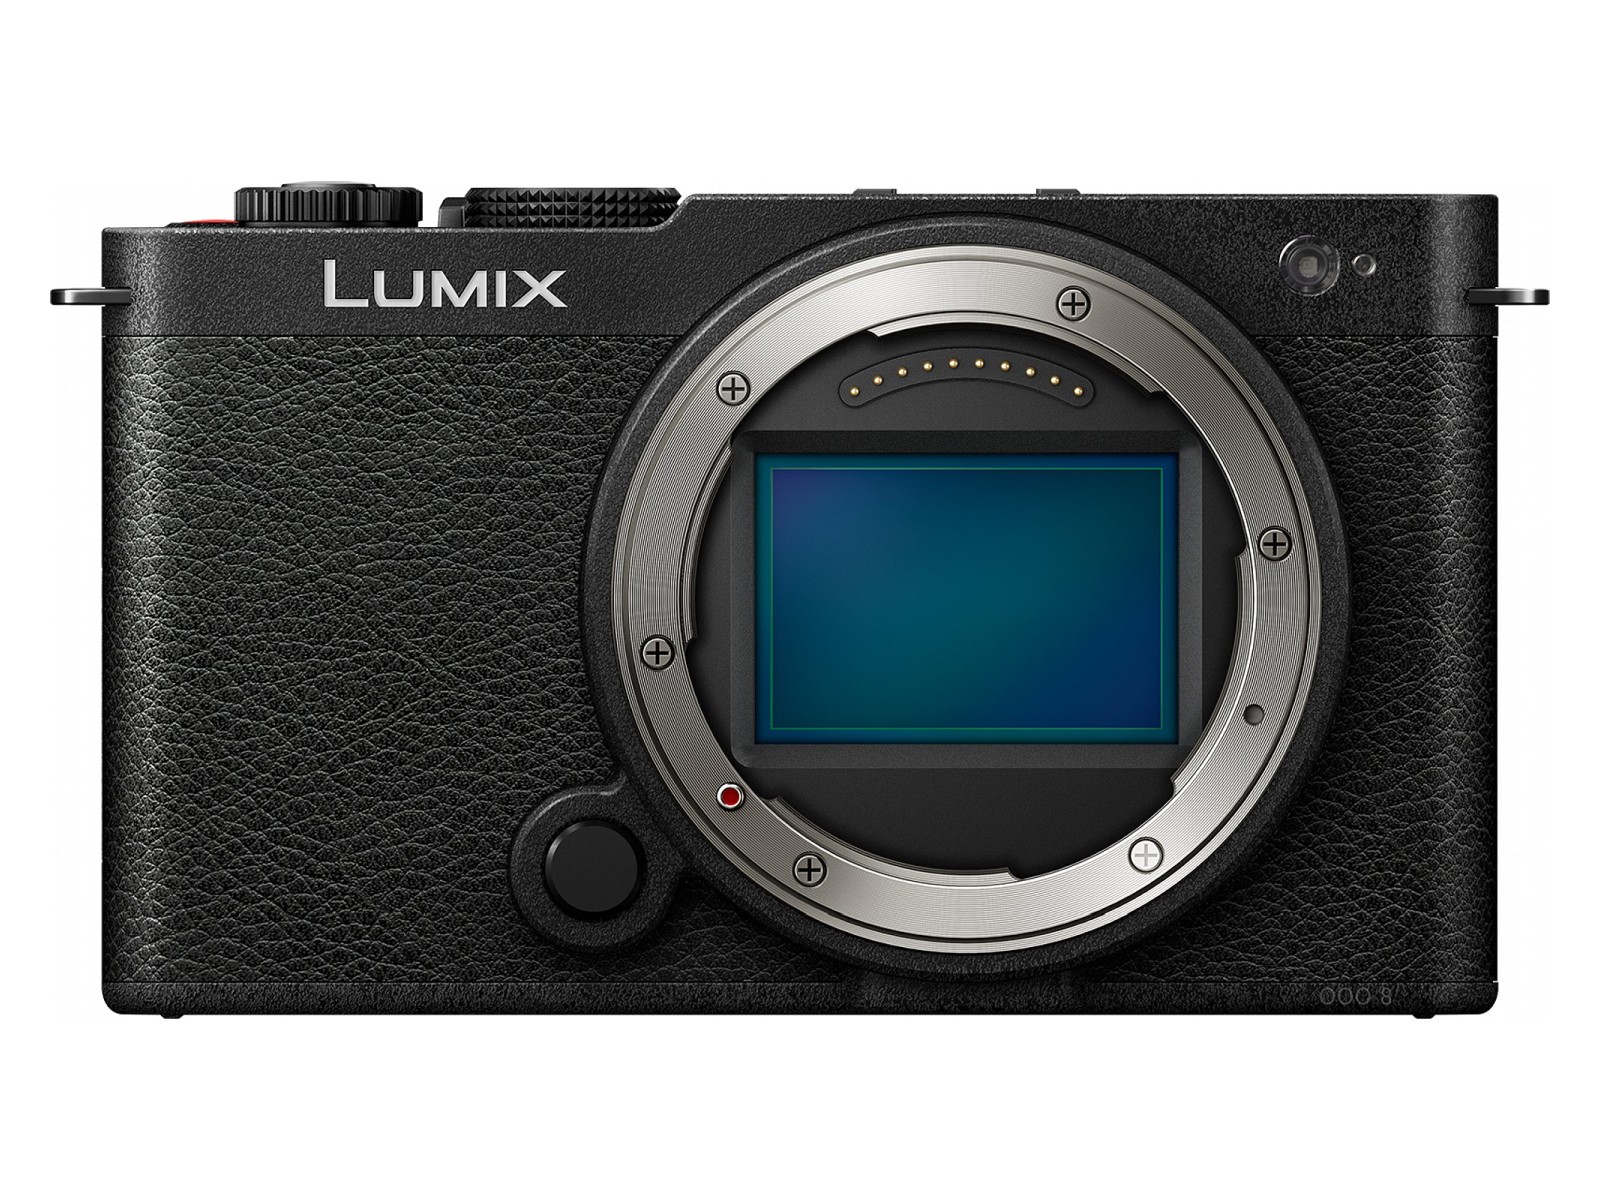 MILC de fotograma completo en un fotograma pequeño: la Panasonic Lumix S9 ya está aquí